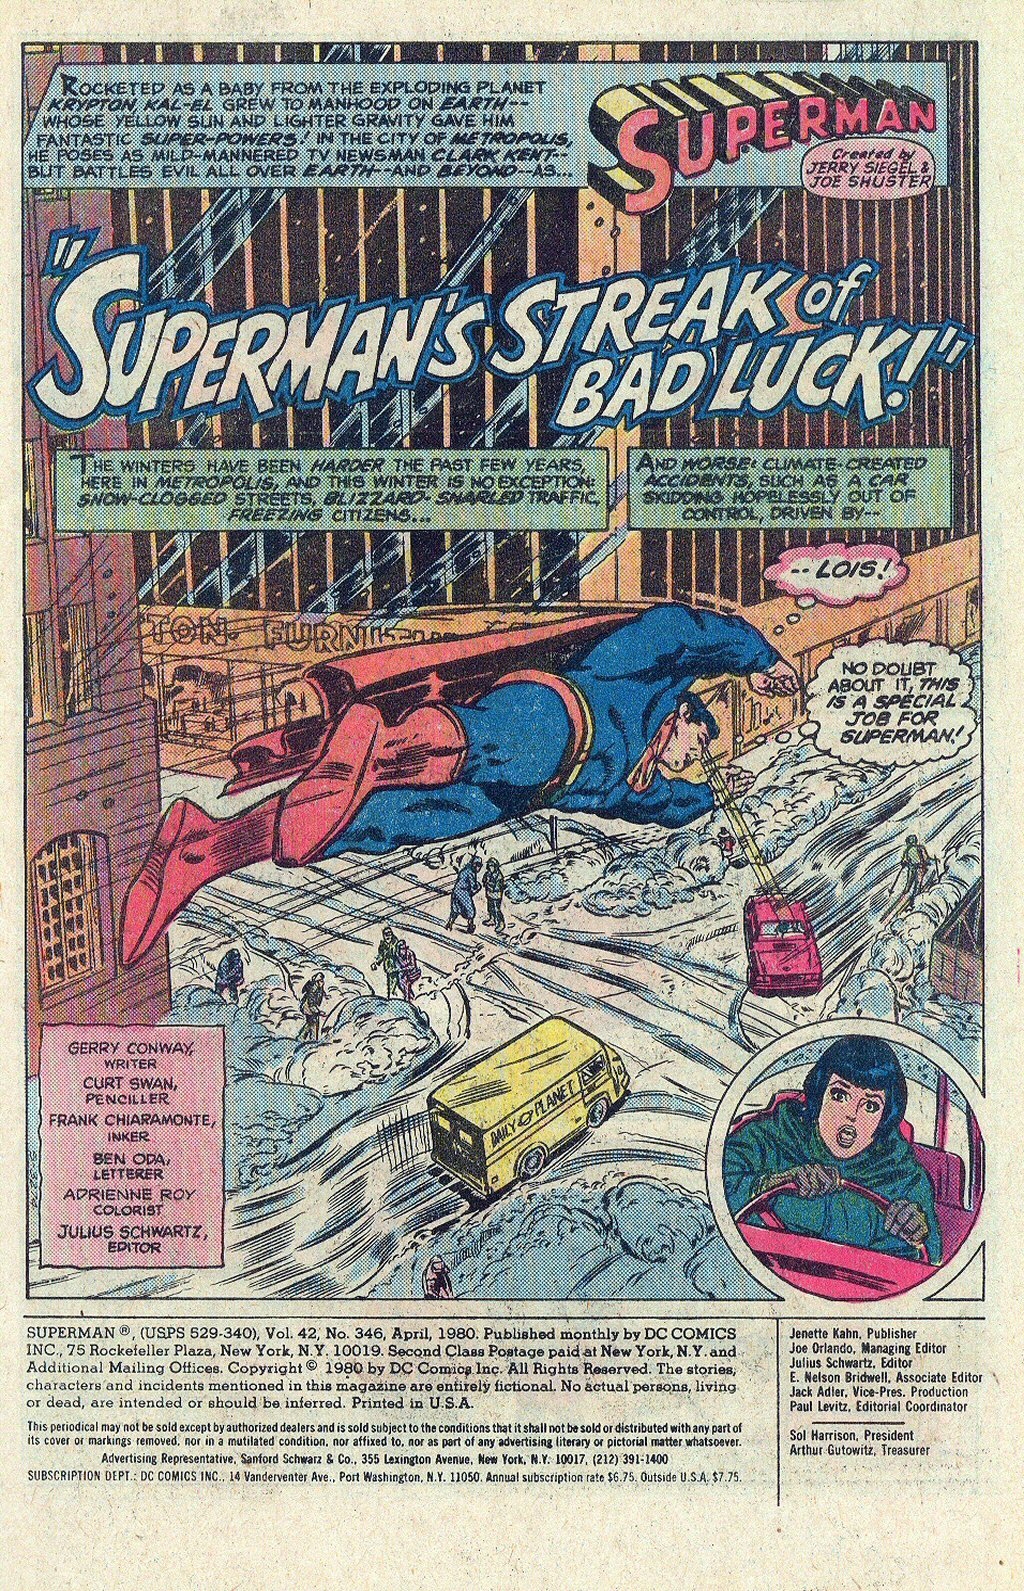 [Superman-1939+346-001.jpg]